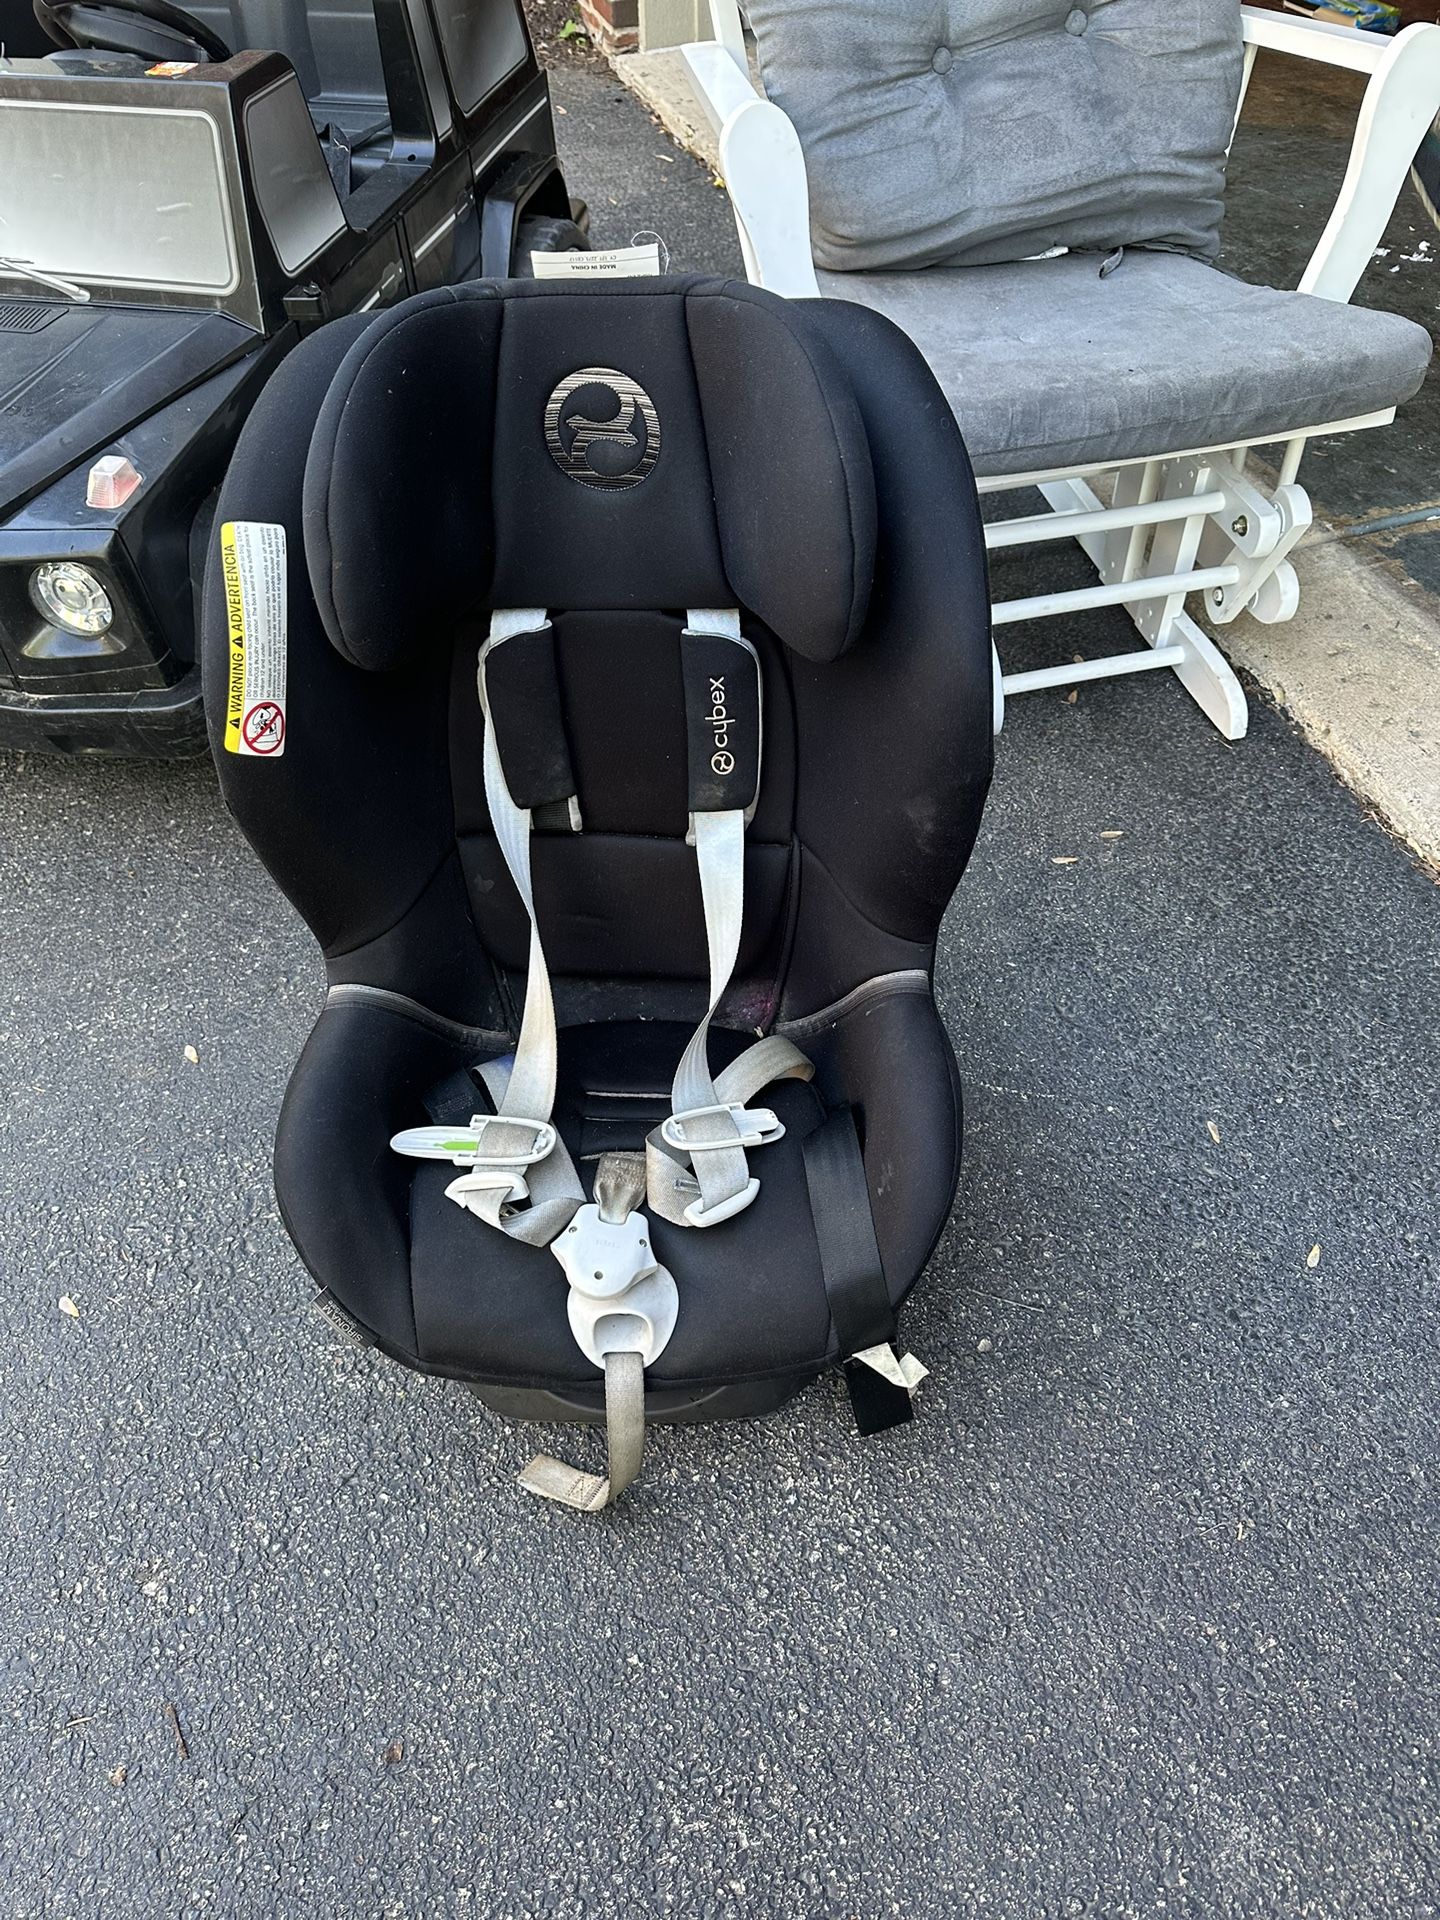 Infant To Toddler Car Seat 